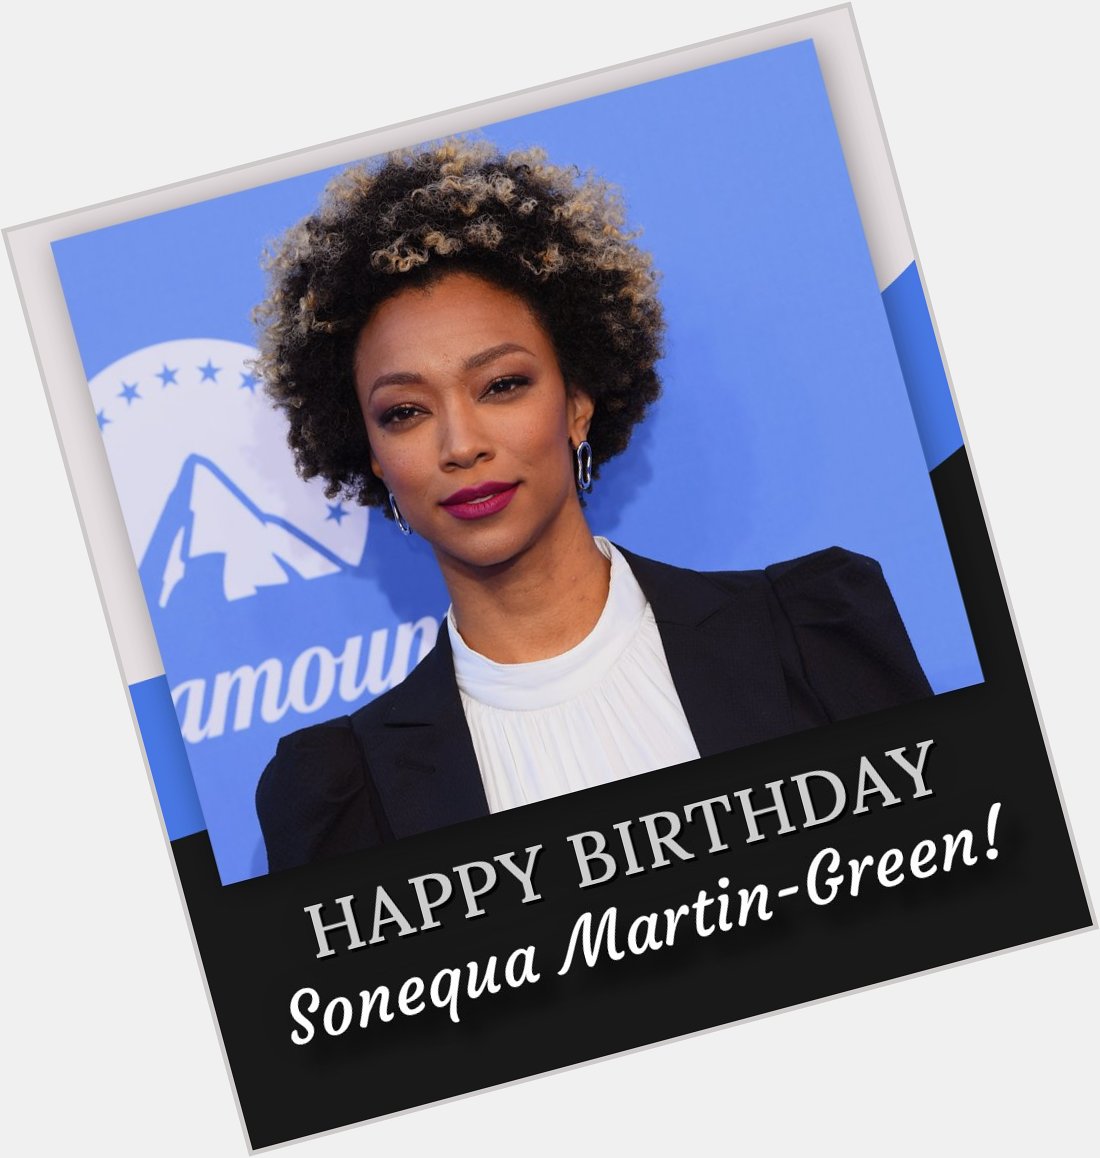 Happy birthday, Sonequa Martin-Green! 